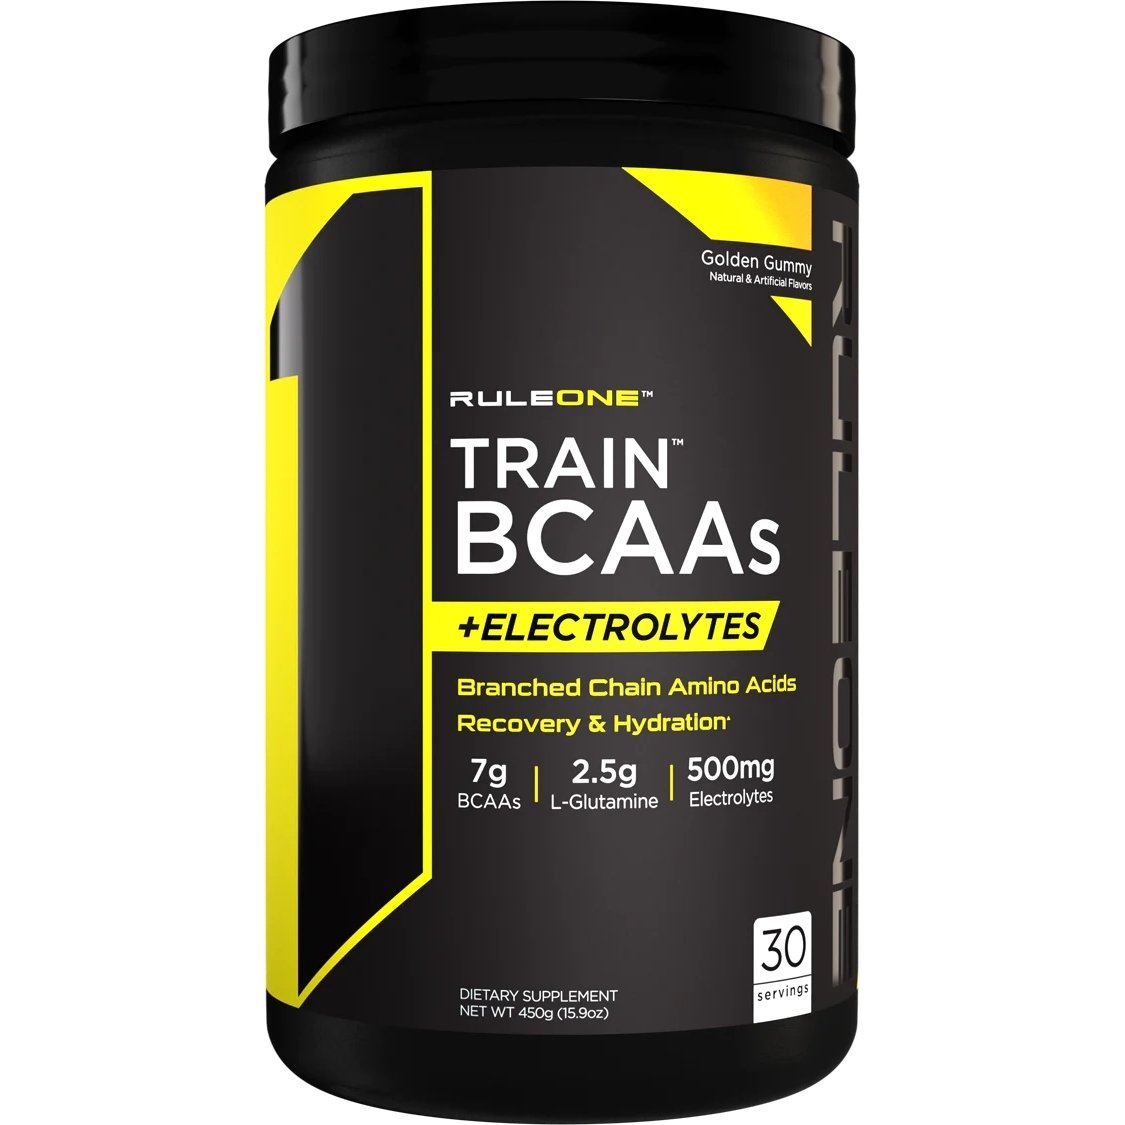 Аминокислота BCAA Rule 1 Train BCAAs + Electrolytes, 450 грамм Желейные конфеты,  ml, Rule One Proteins. BCAA. Weight Loss recuperación Anti-catabolic properties Lean muscle mass 